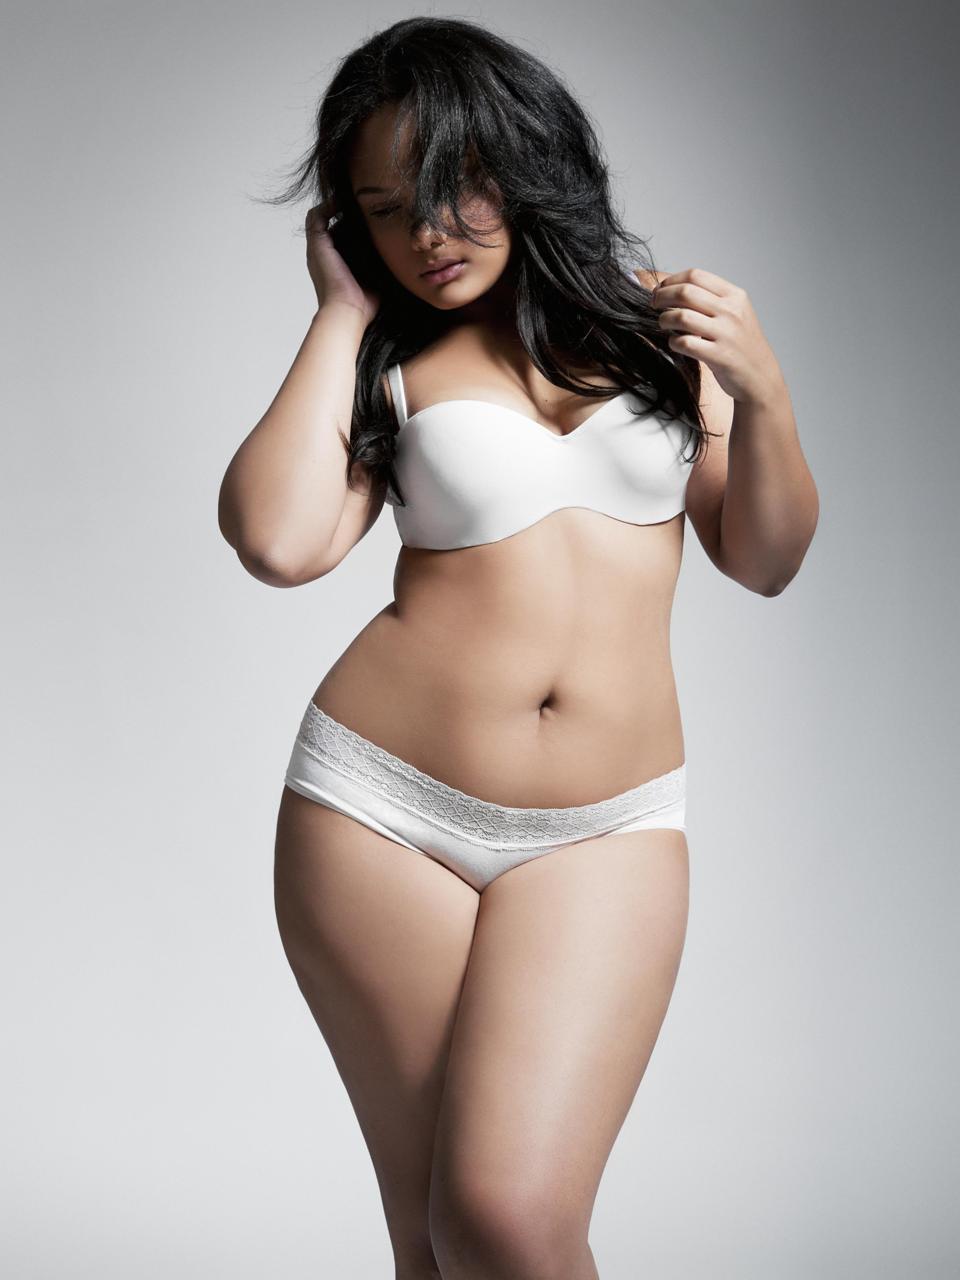 Tara lynn plus size model nude